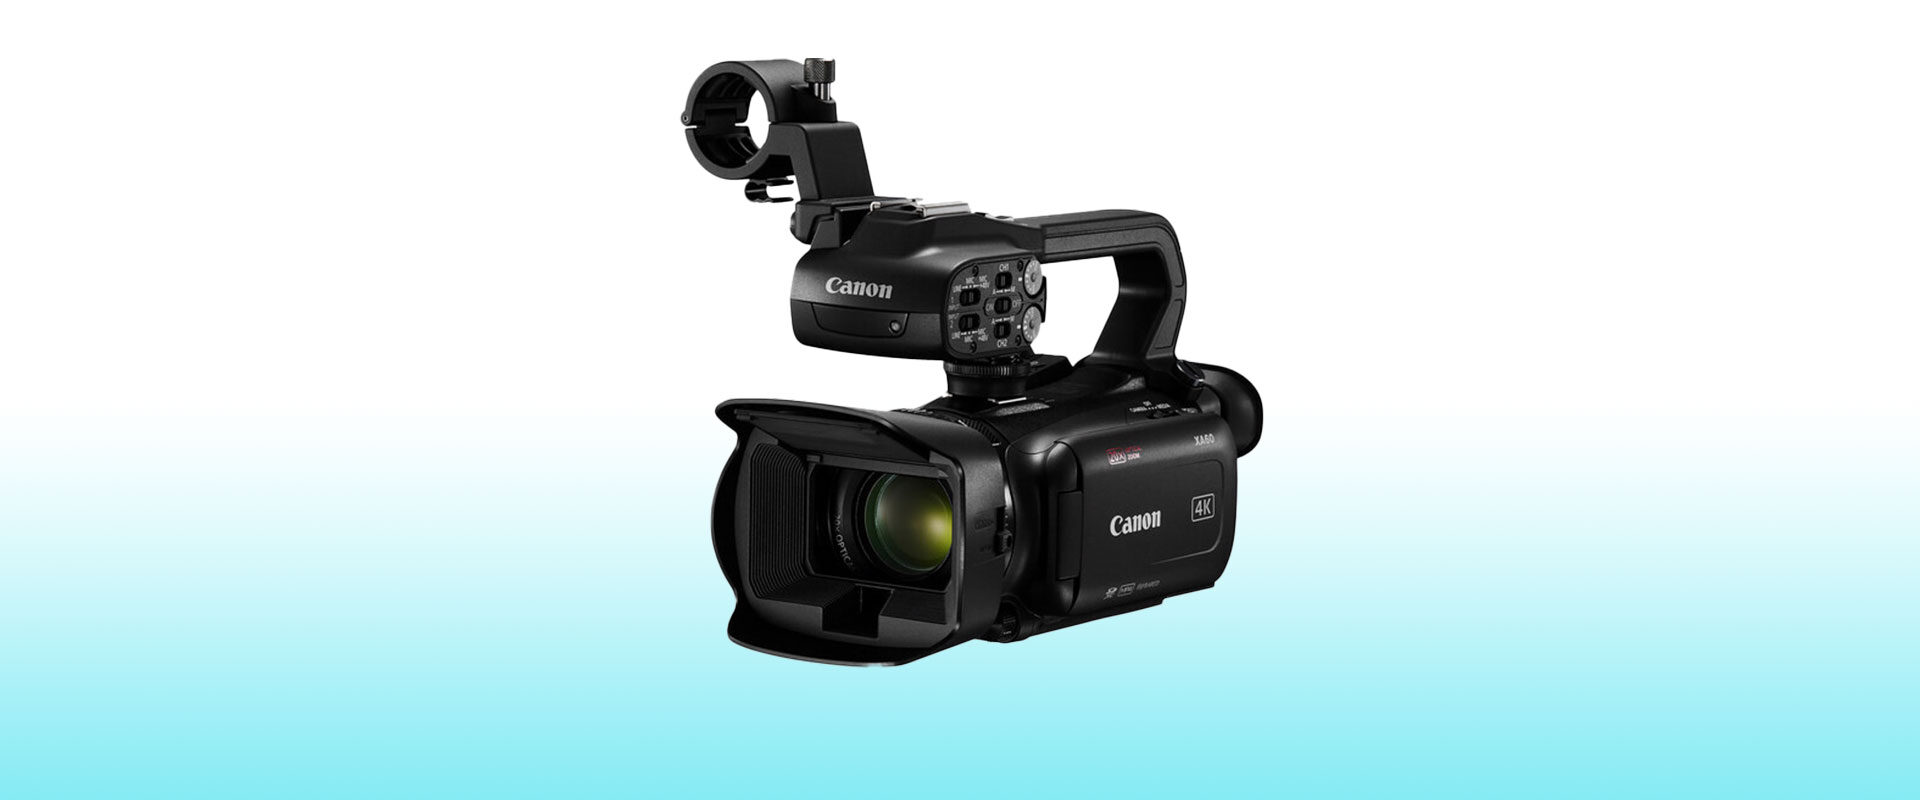 Canon XA60 professional UHD 4K Camcorder